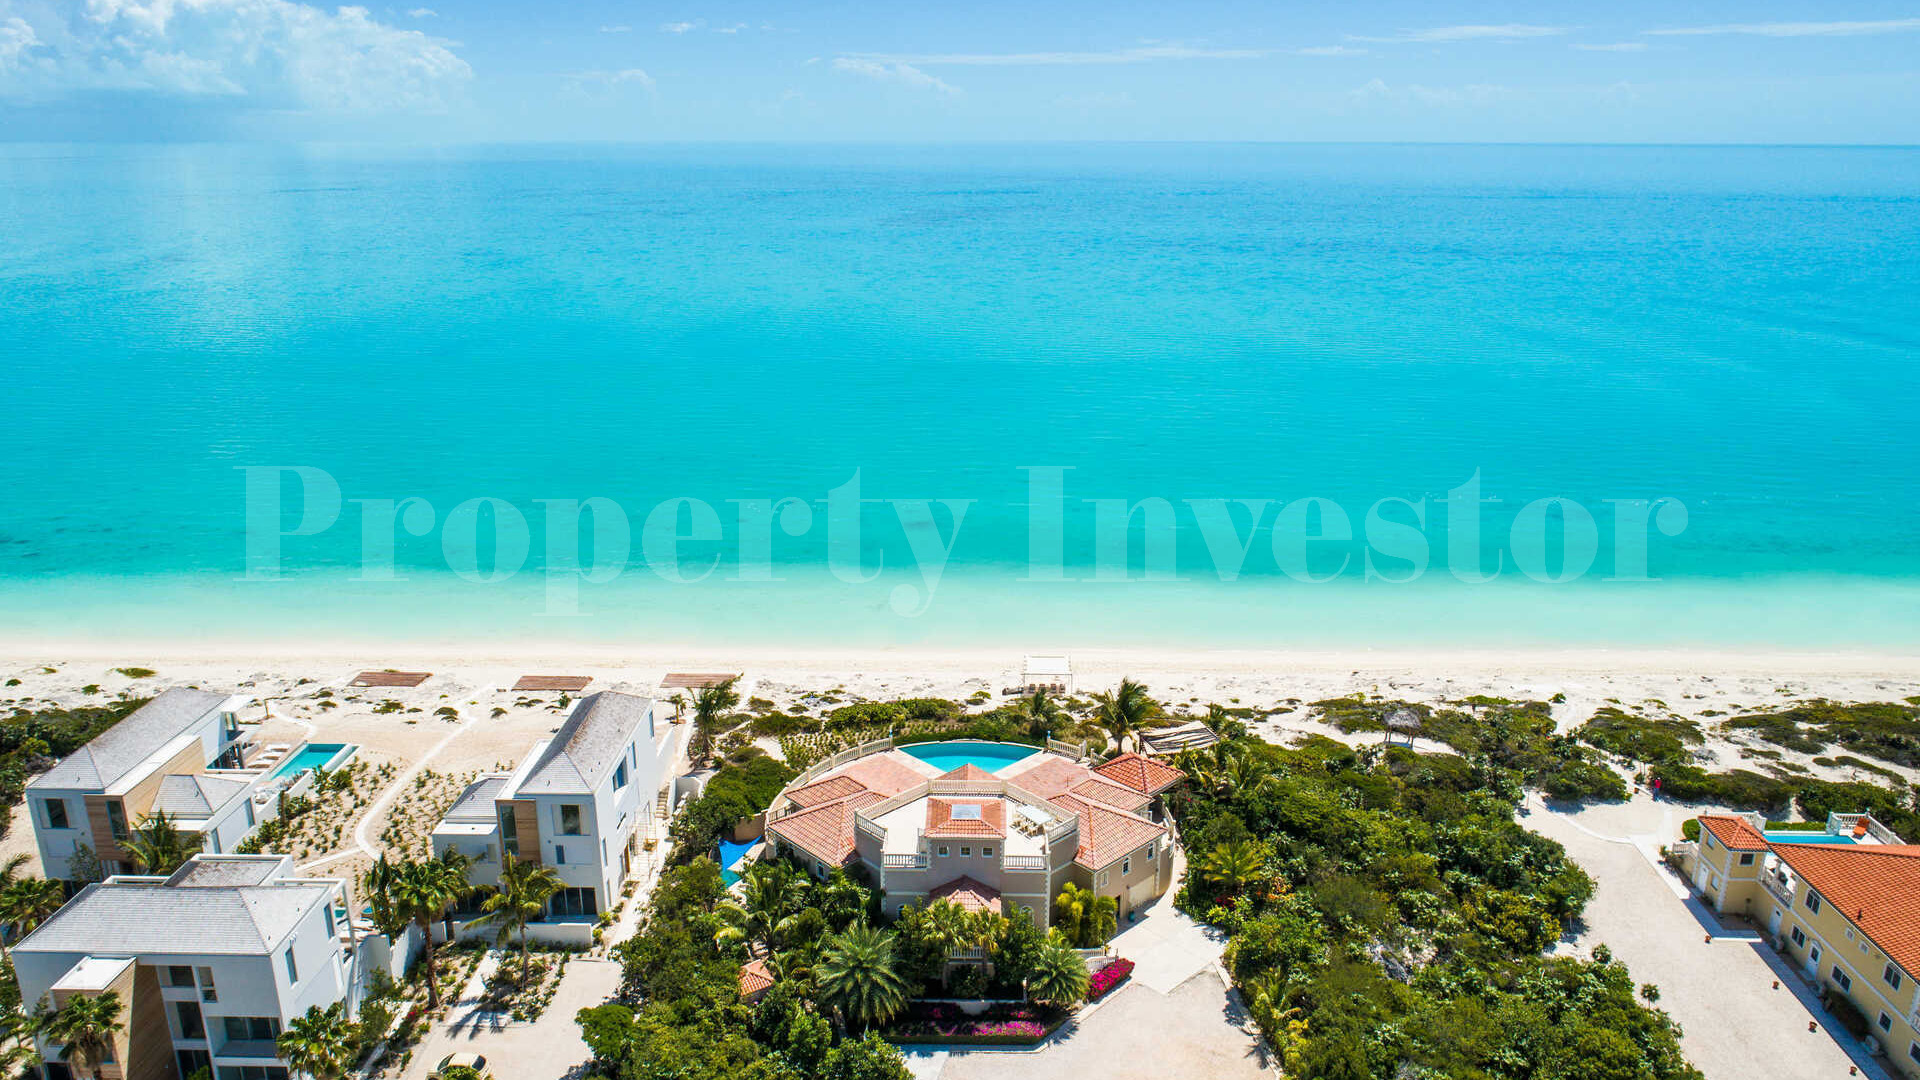 Popular 7 Bedroom Beachfront Rental Villa on Long Beach, Turks & Caicos